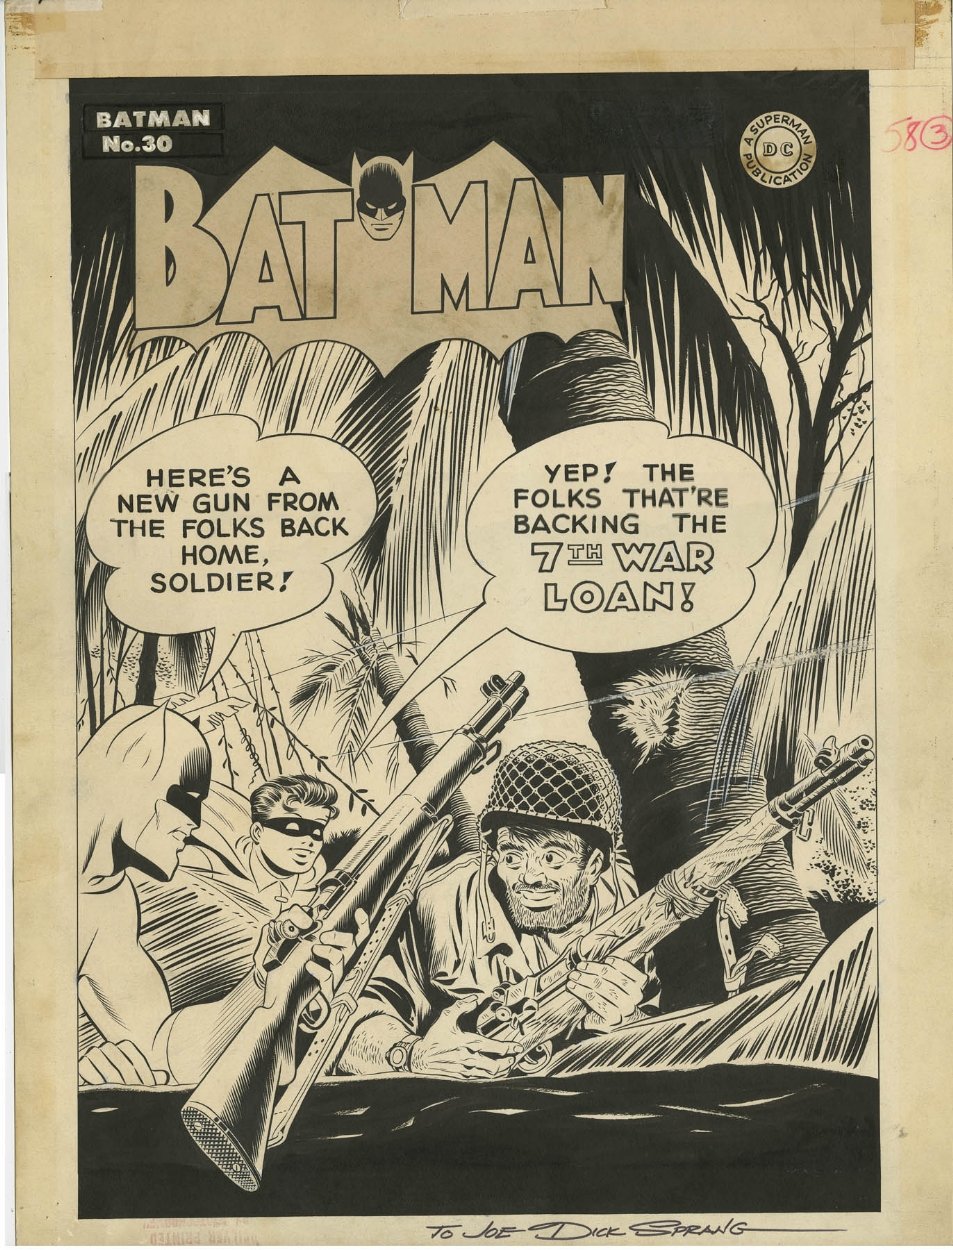 BATMAN #30 COVER ( 1945, DICK SPRANG) RARE GOLDEN AGE BATMAN WWII